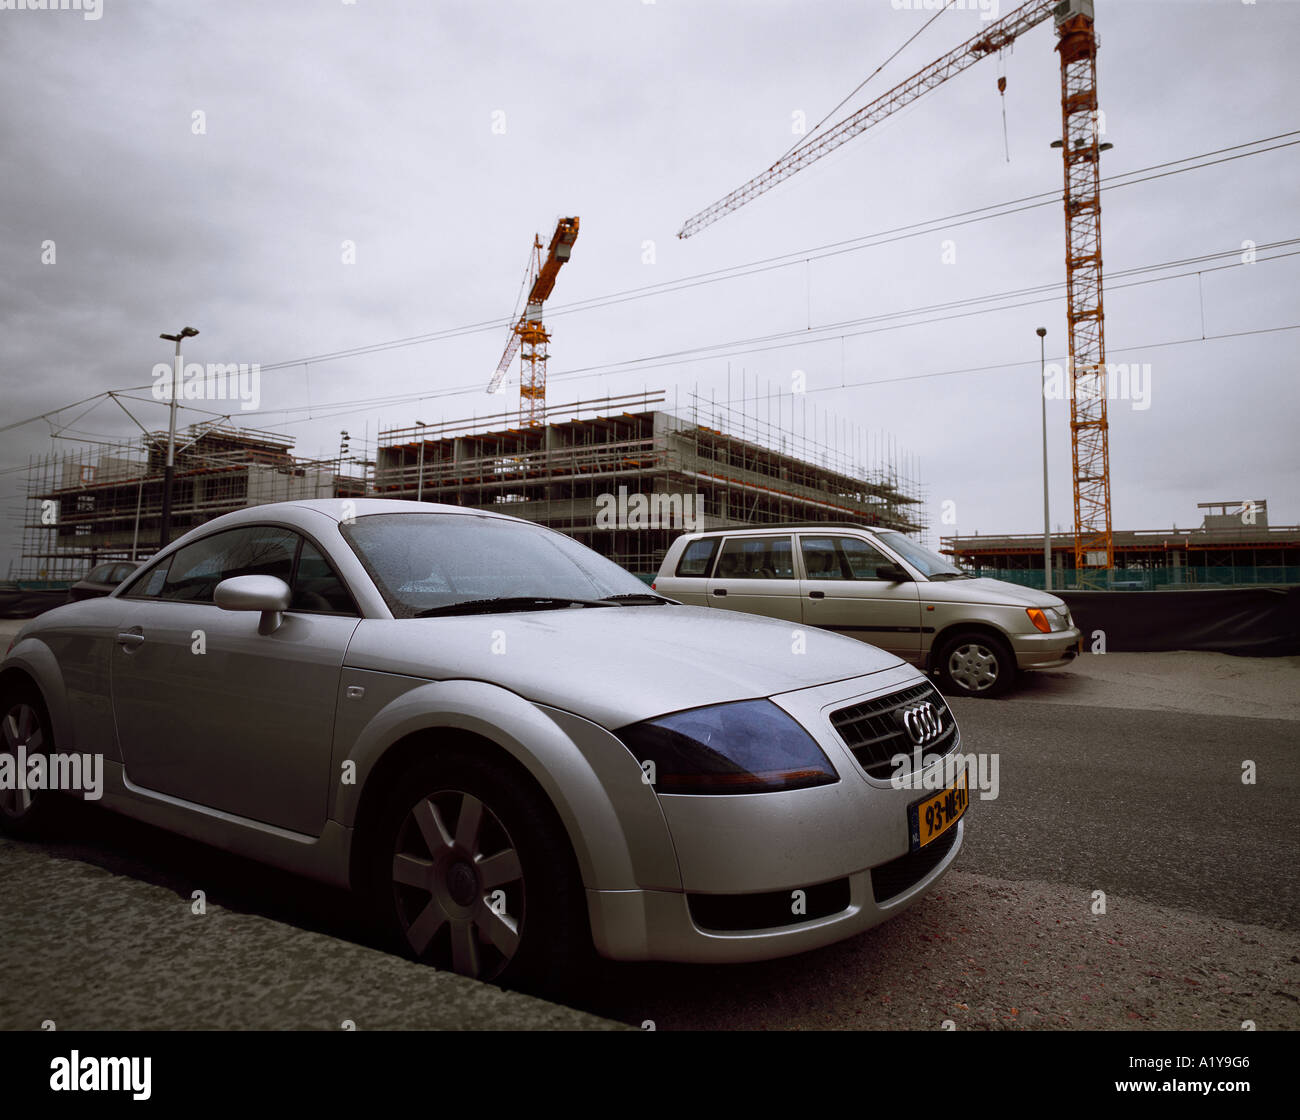 Autonews, sviluppo IJburg, Amsterdam, Paesi Bassi. Foto Stock